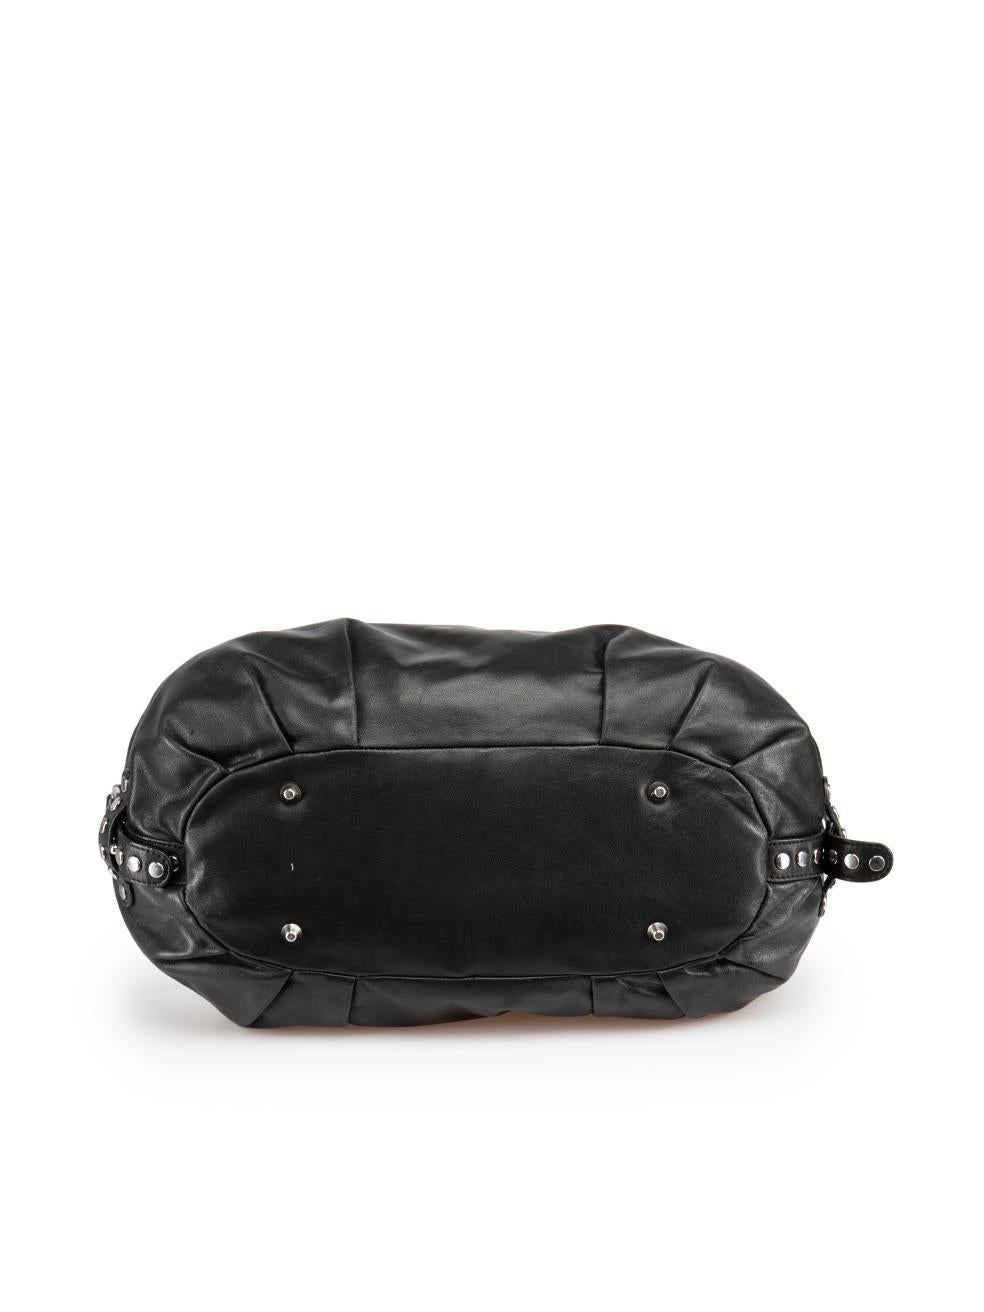 Women's Sonia Rykiel Black Leather Studded Shoulder Bag